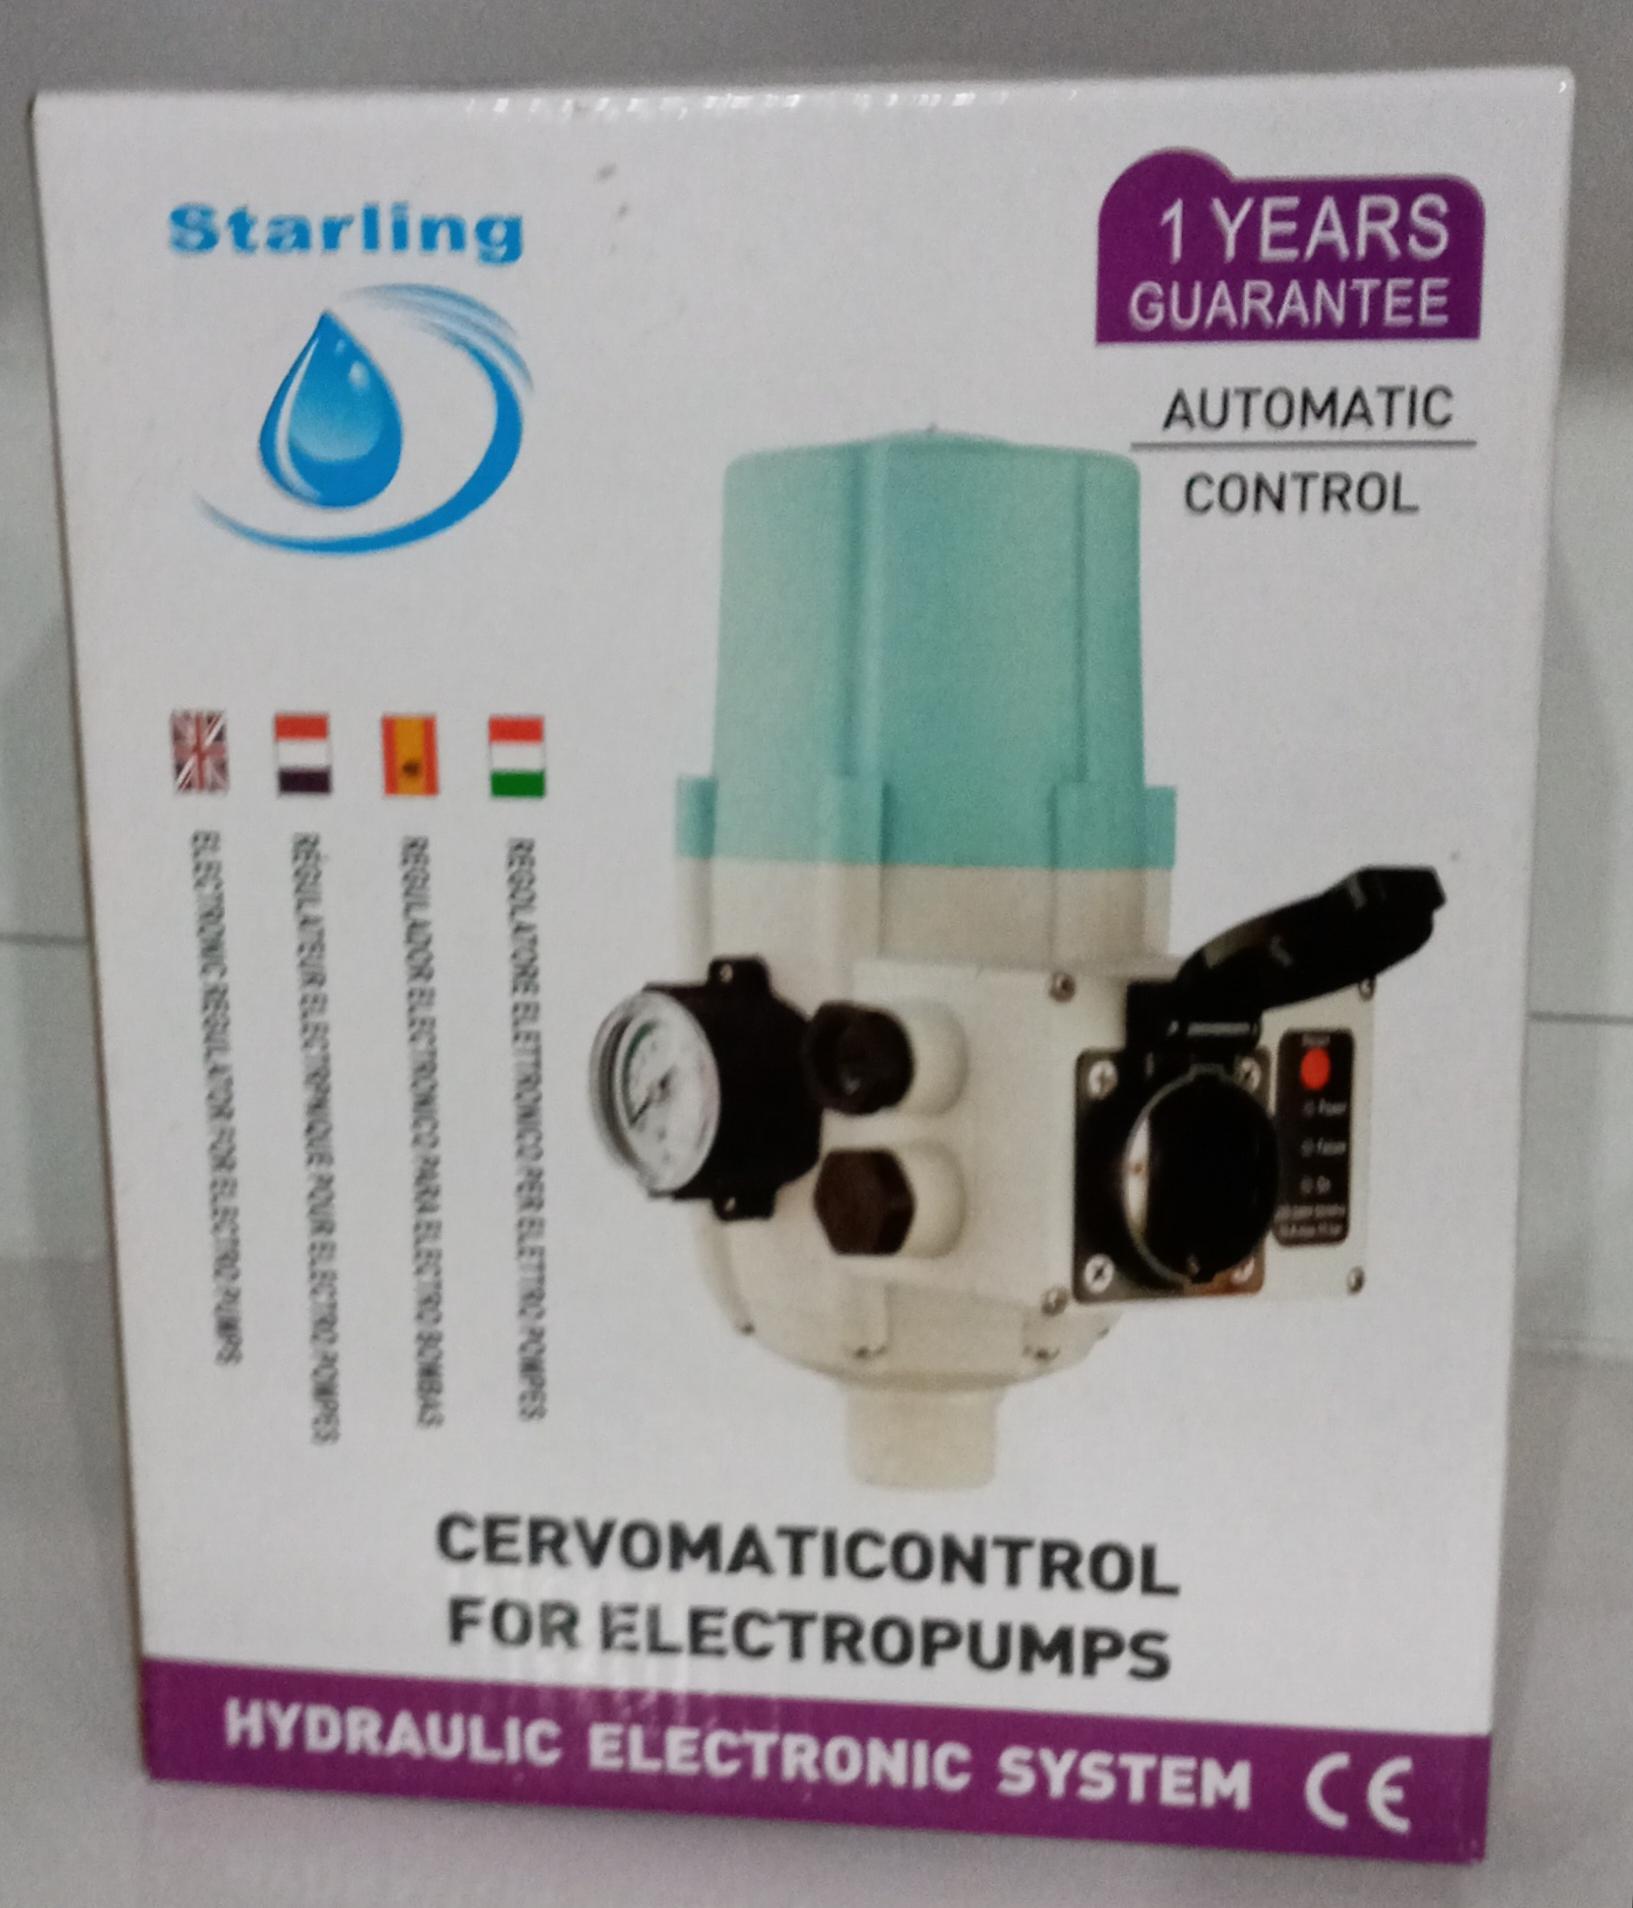 CERVOMATICONTROL FOR ELECTROPUMPS